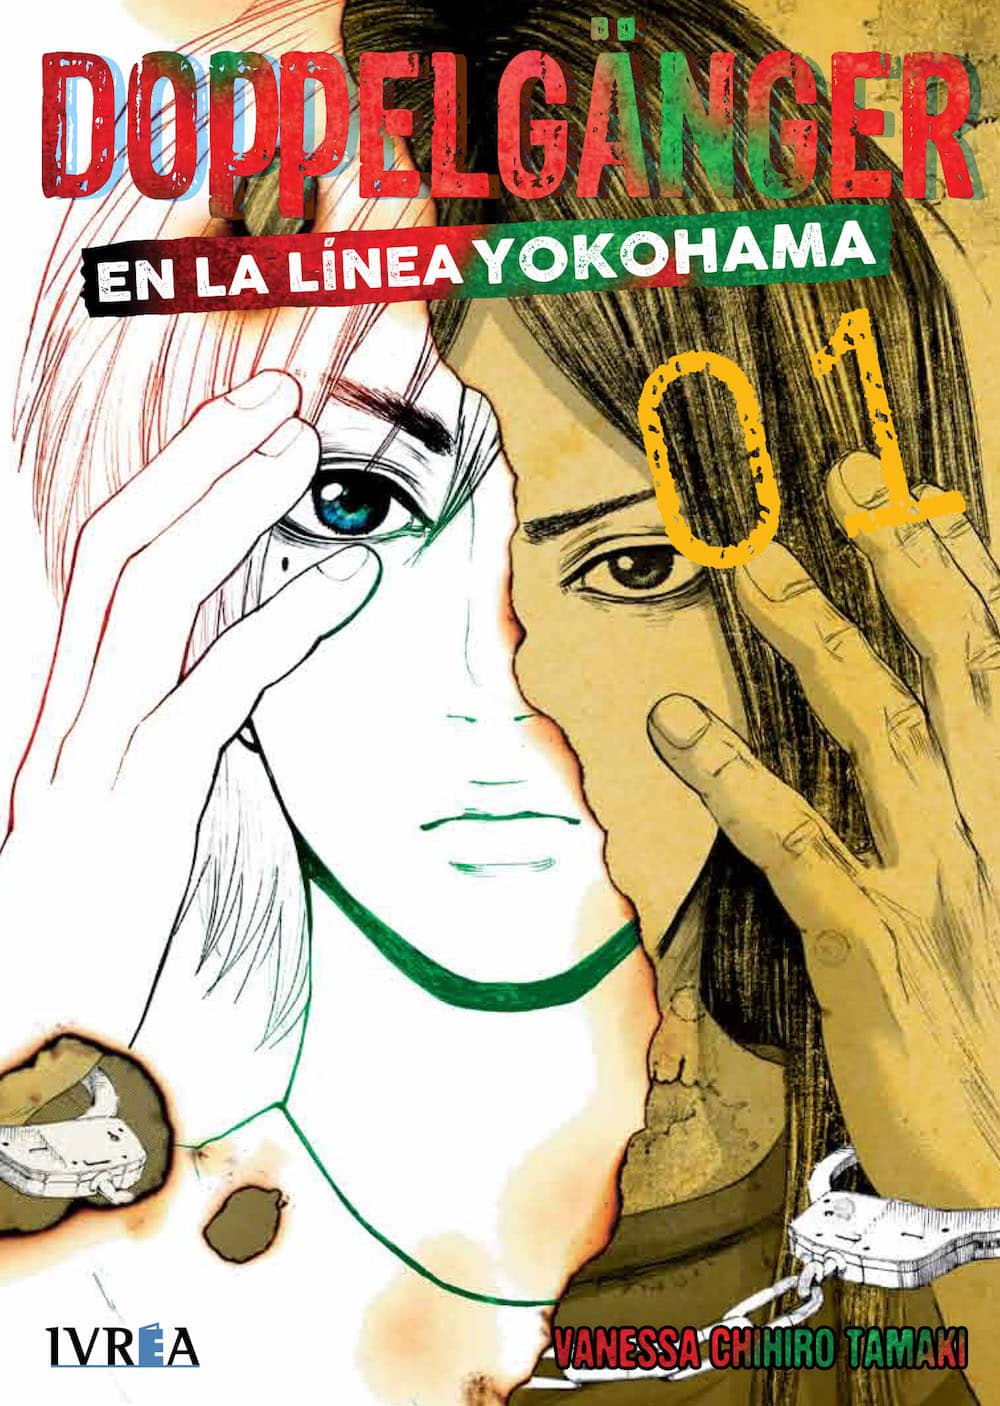 DOPPELGANGER 01 EN LA LINEA DE YOKOHAMA